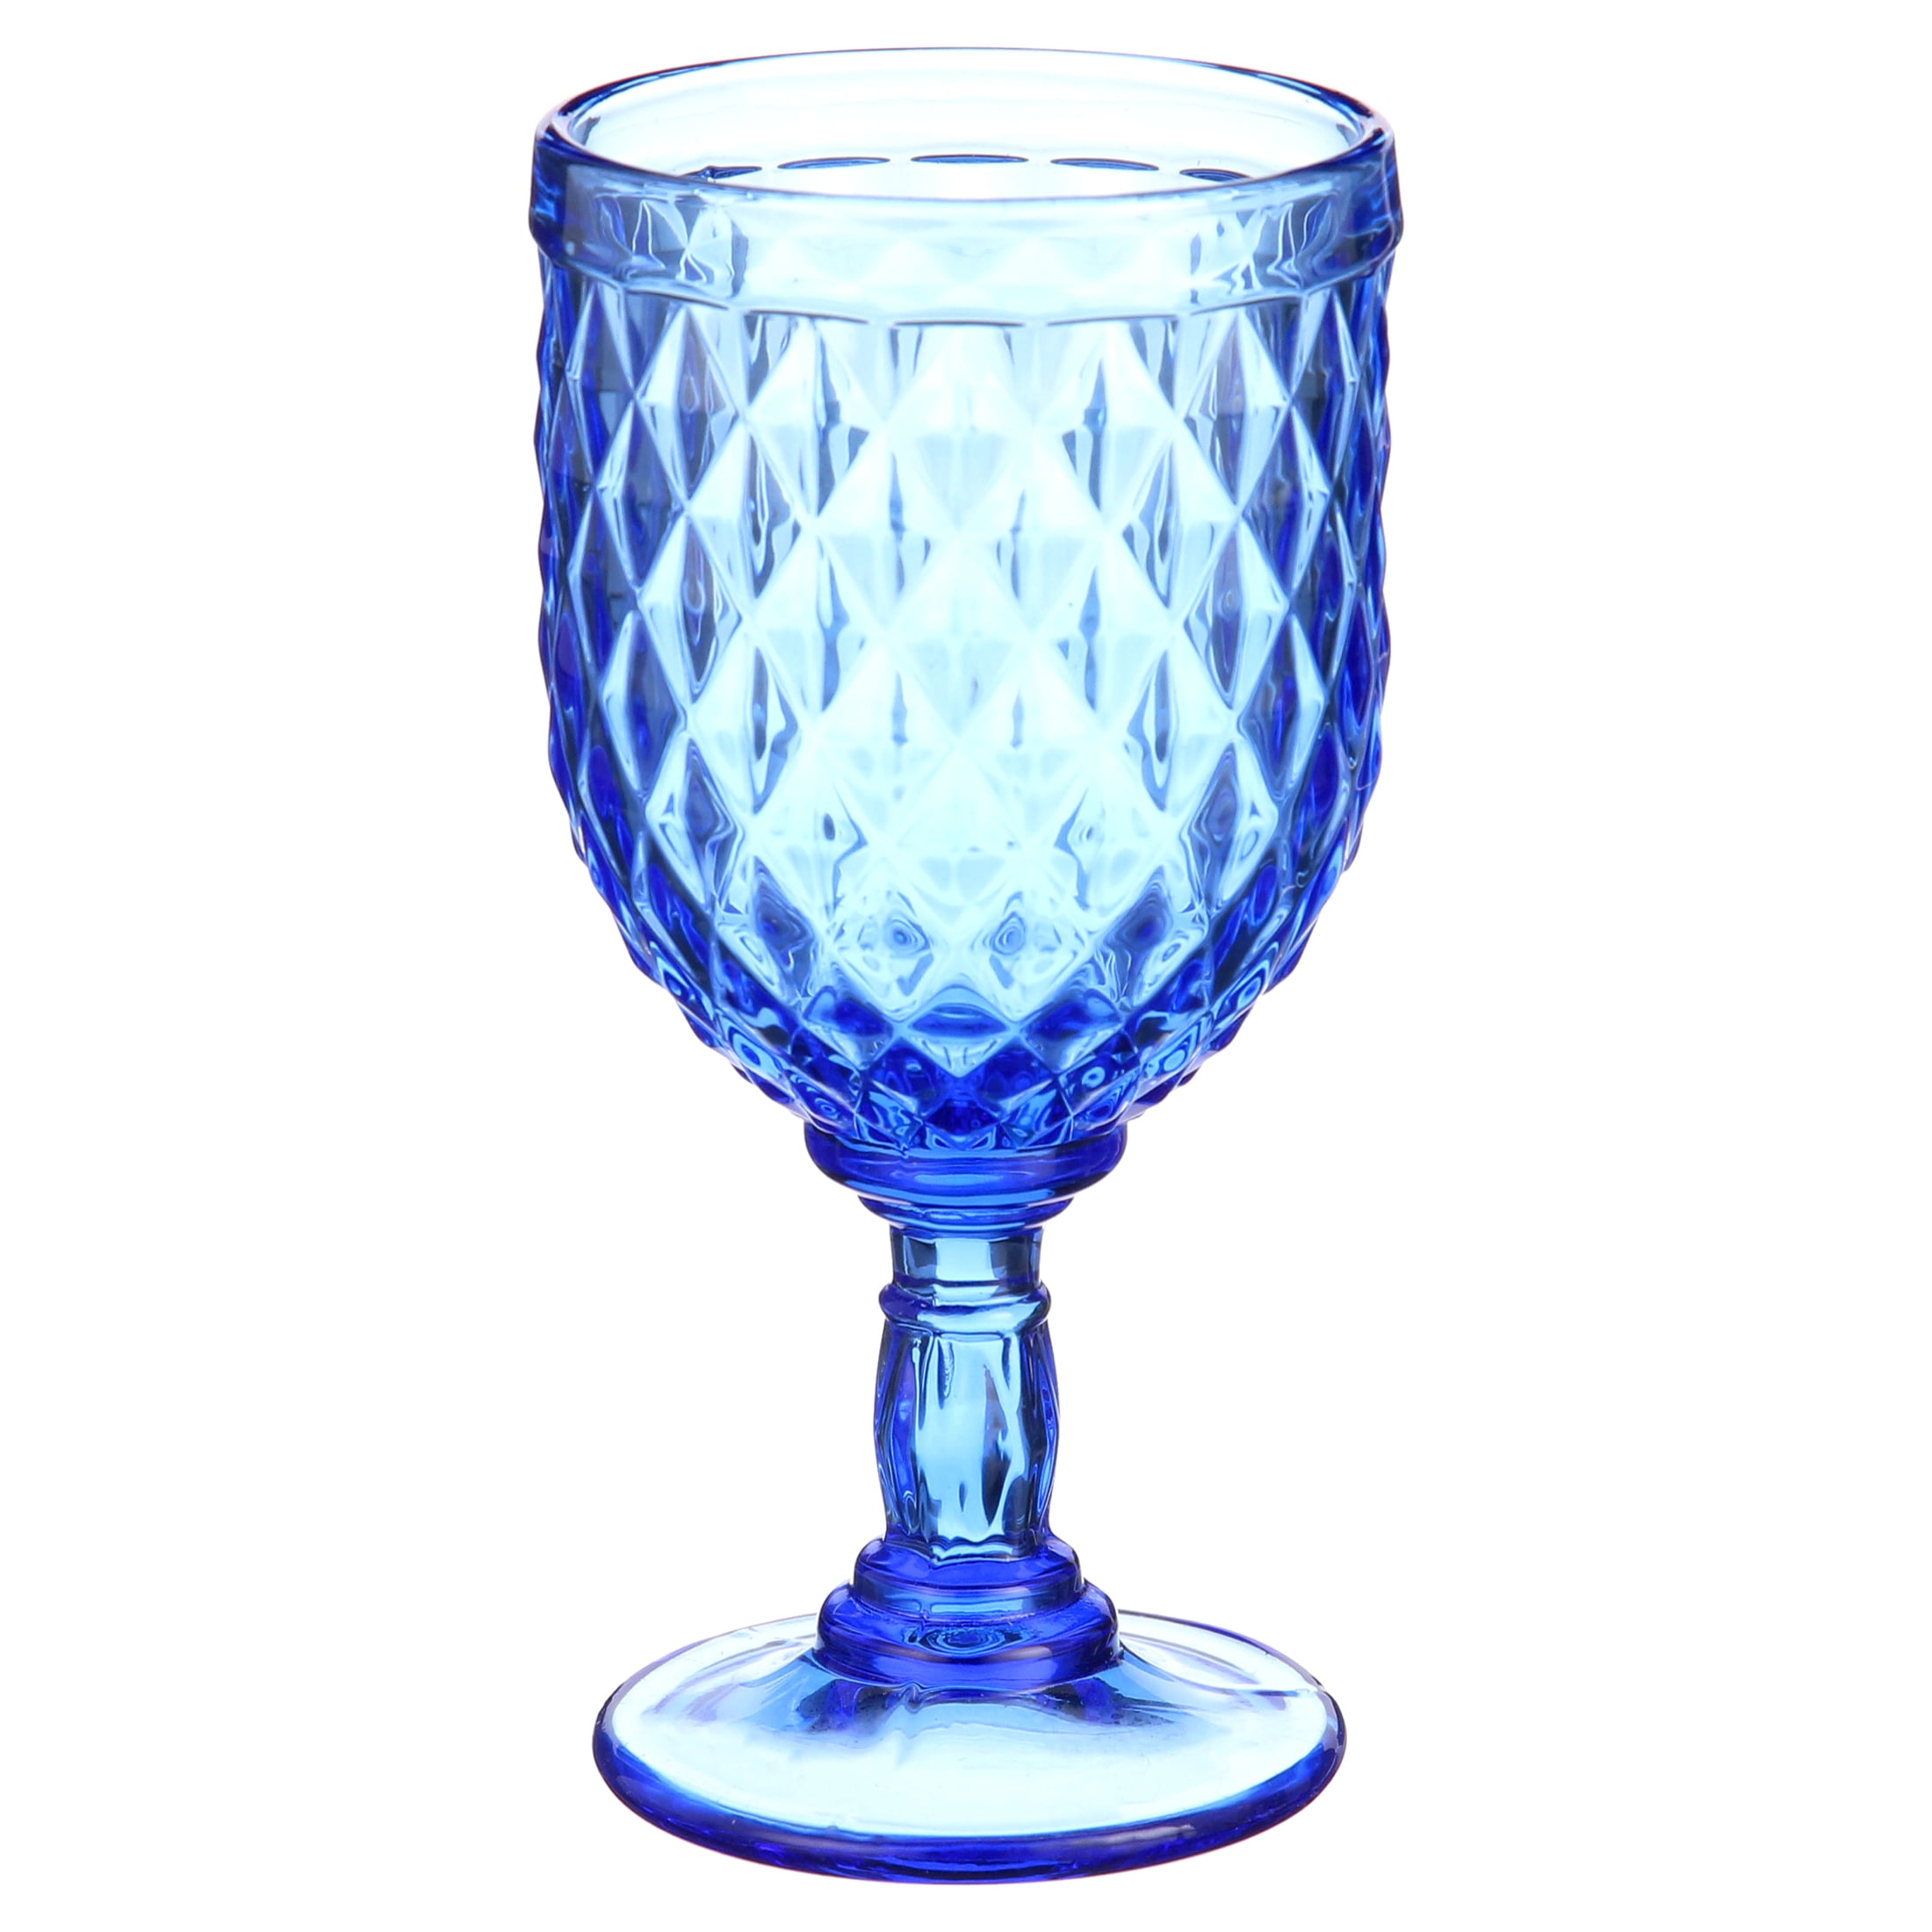 Rambouillet Blue Tinted Water Goblet Glasses 11 oz, Set of 4